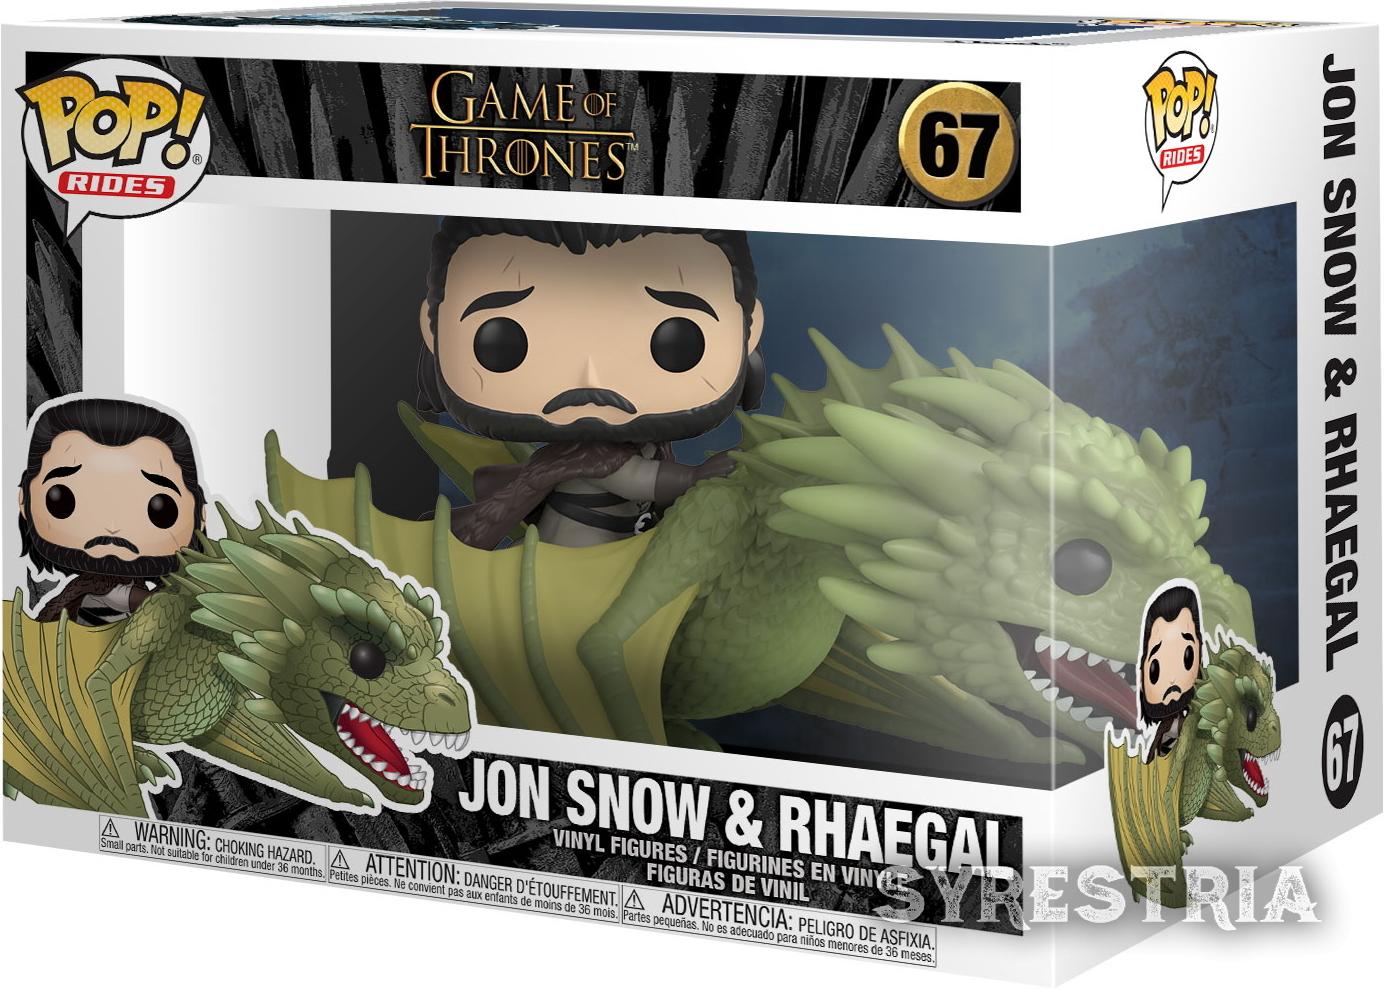 Game of Thrones - Jon Snow & Rhaegal 67 - Funko Pop! - Vinyl Figur